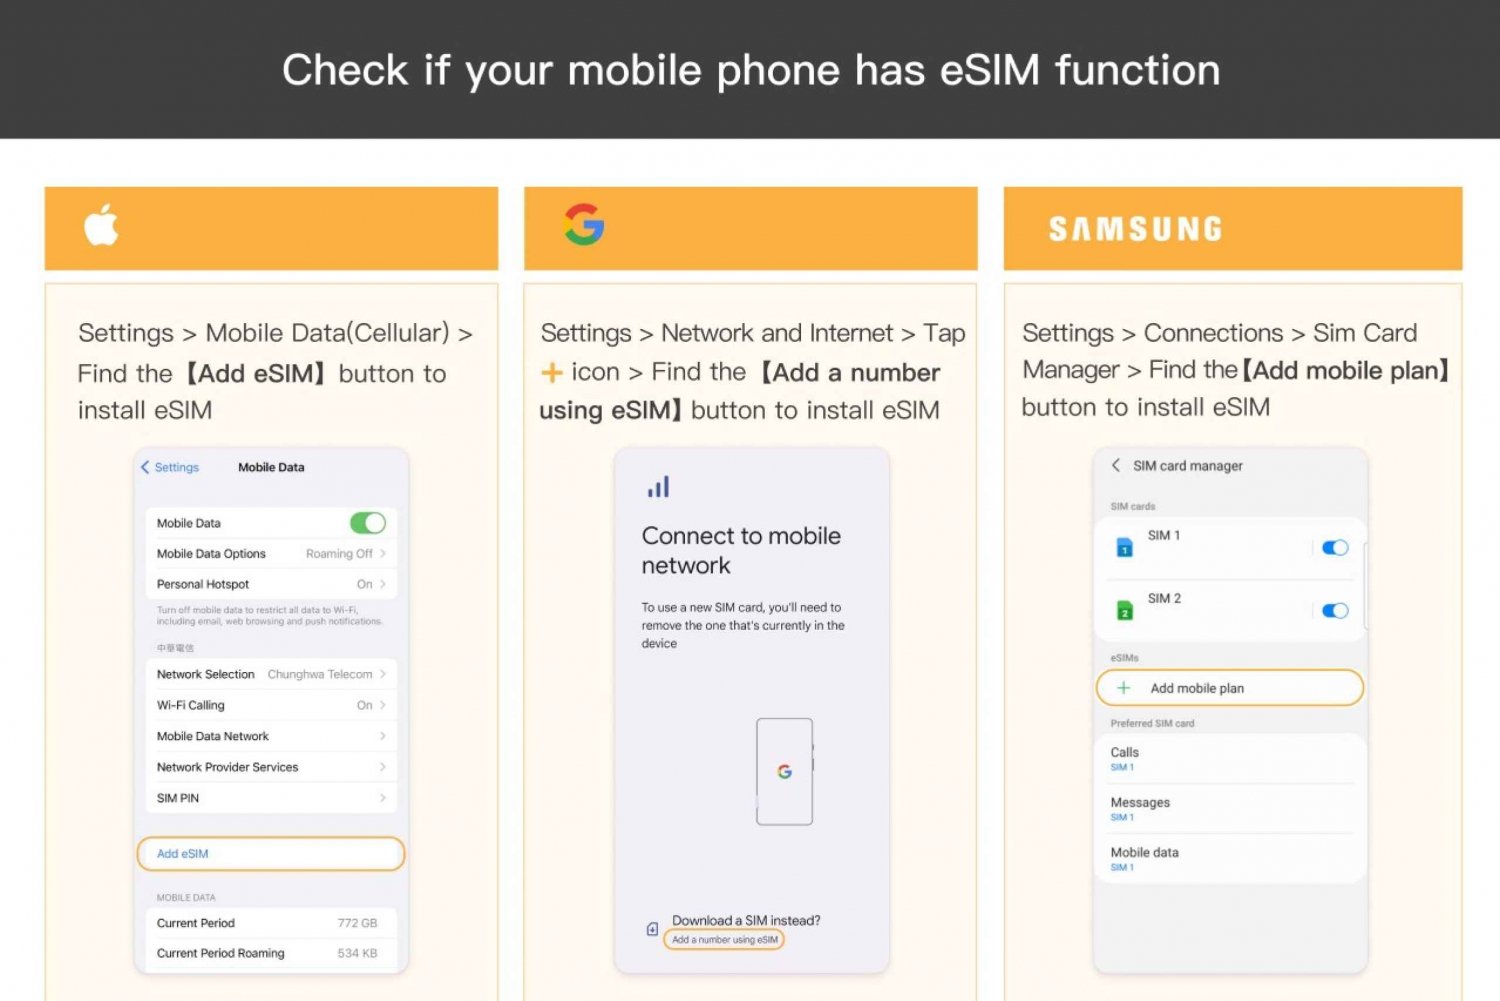 Germany/Europe: eSim Mobile Data Plan